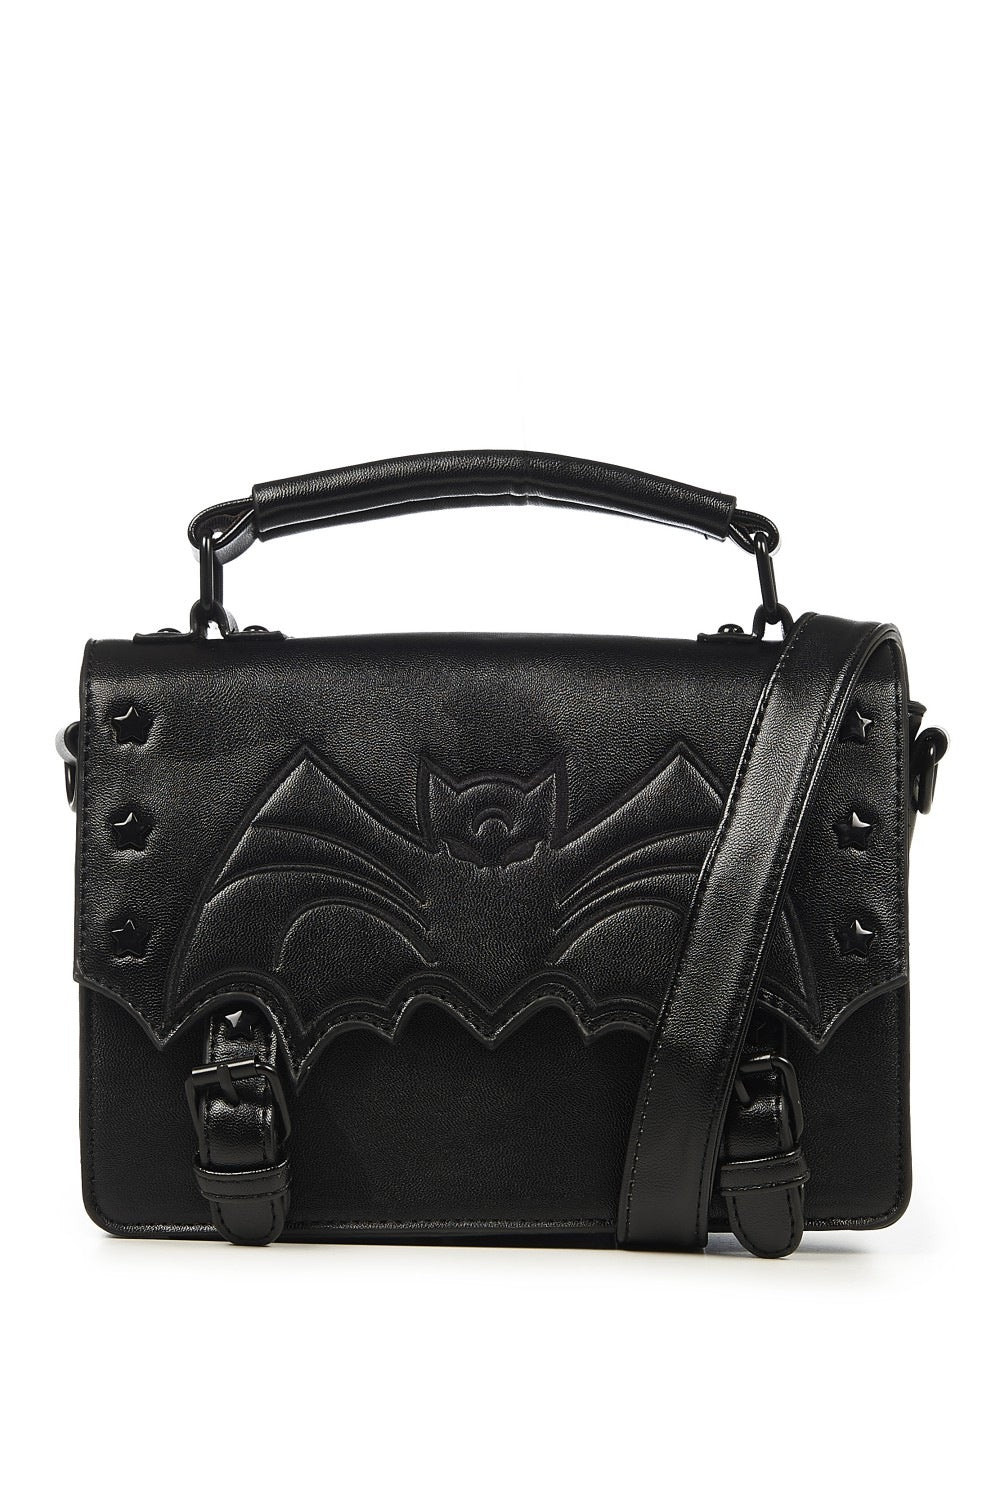 Black satchel handbag with bat emboss print 